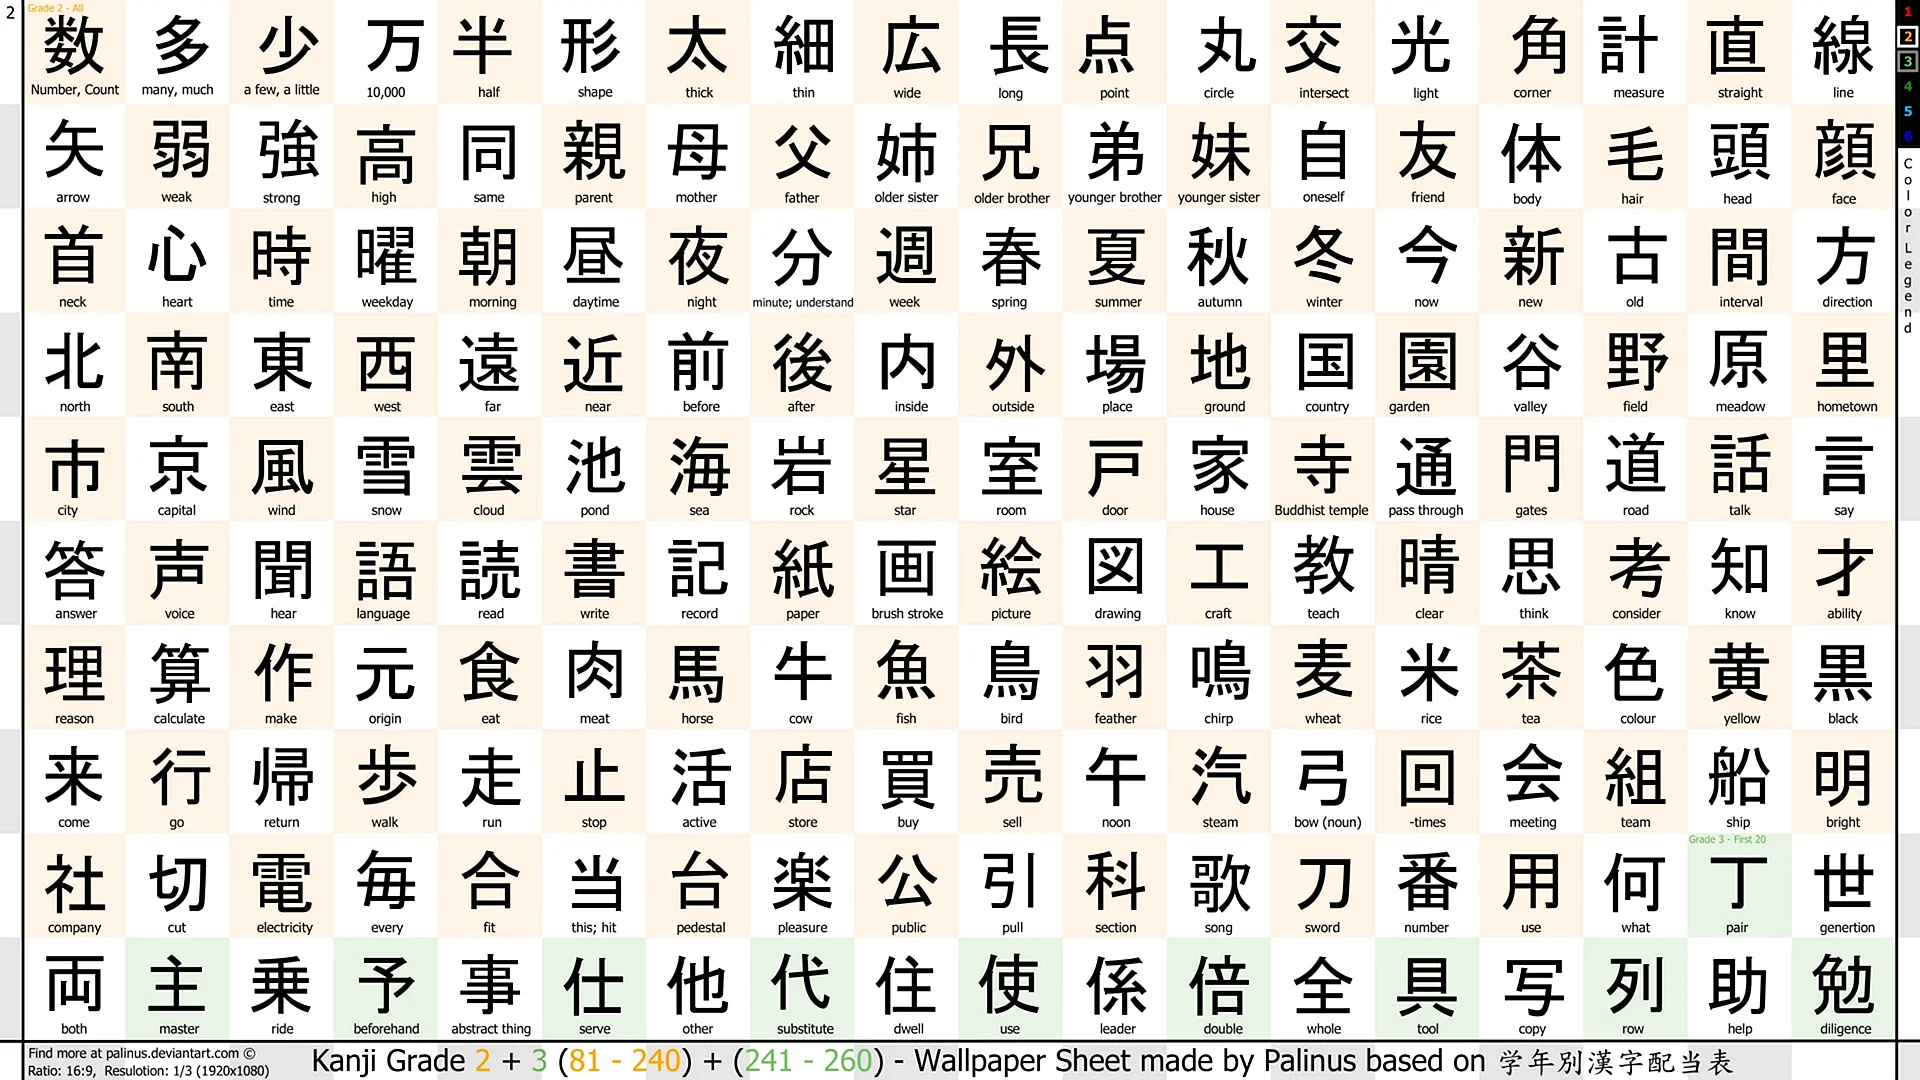 Таблица японских иероглифов кандзи